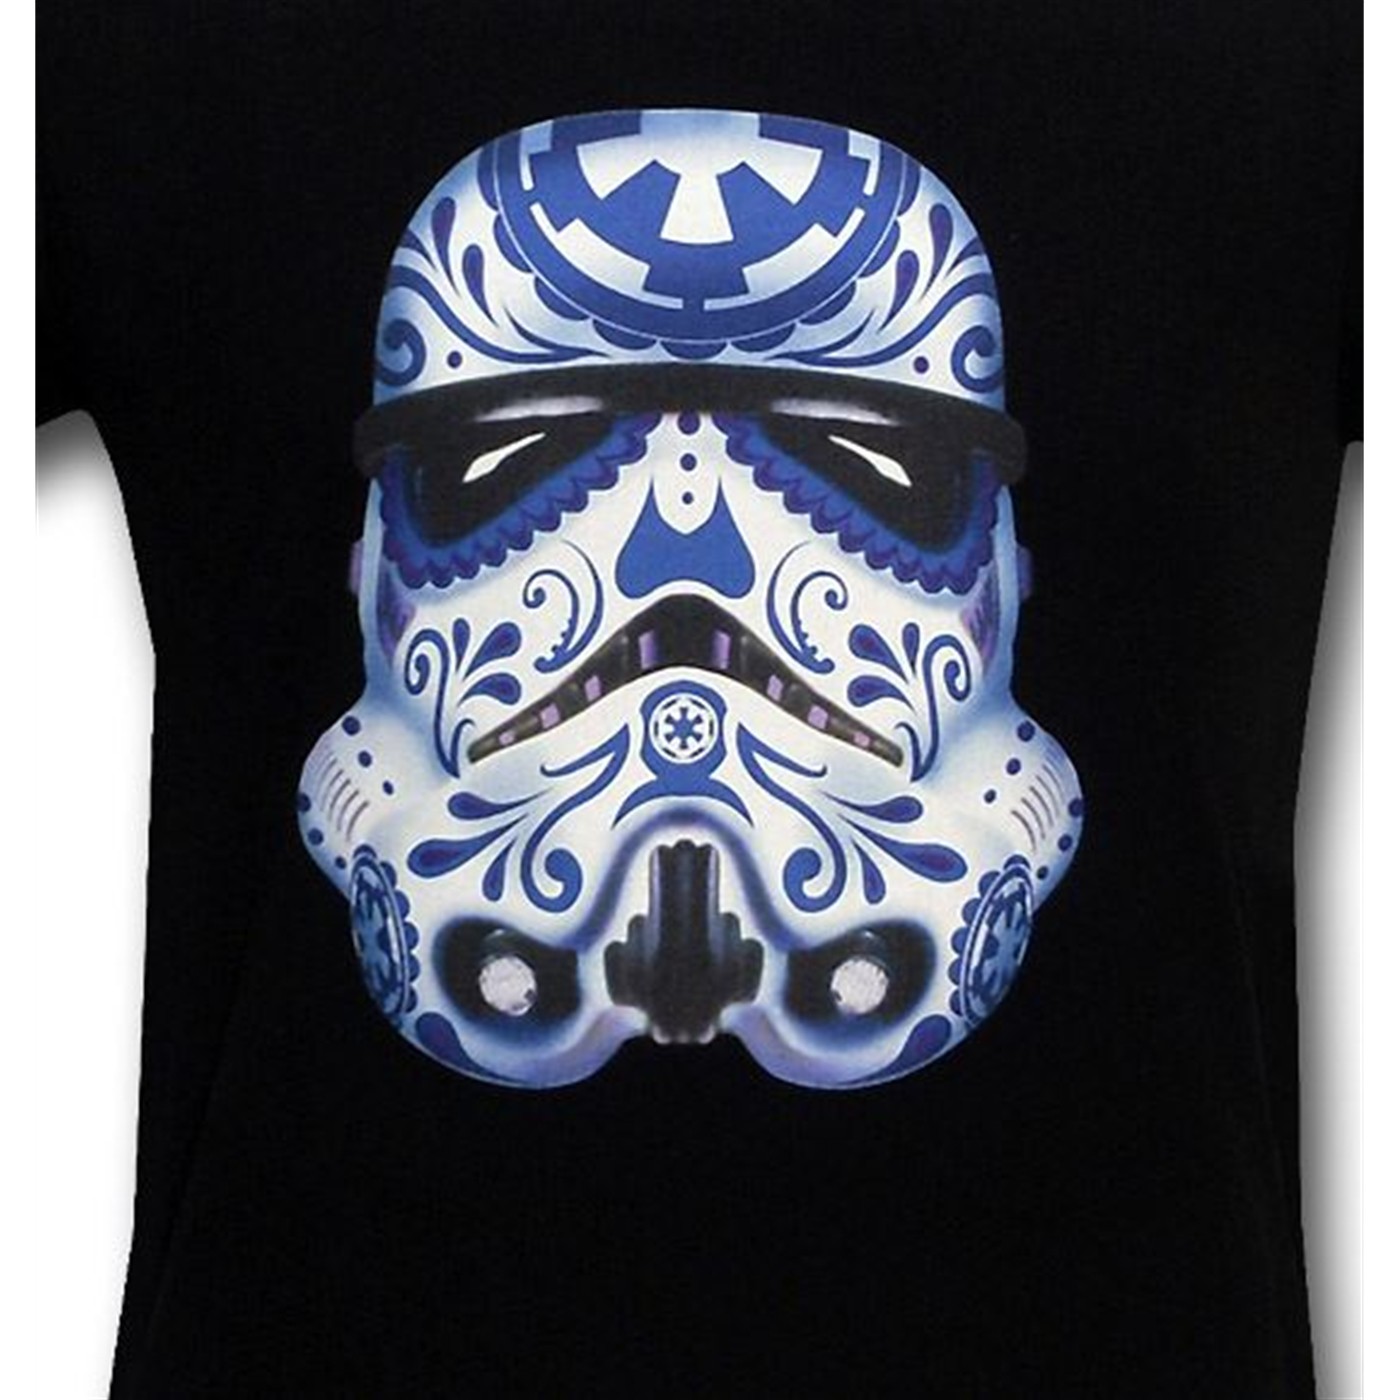 Stormtroopers "Damn Hippy Paint" 30 Single T-Shirt